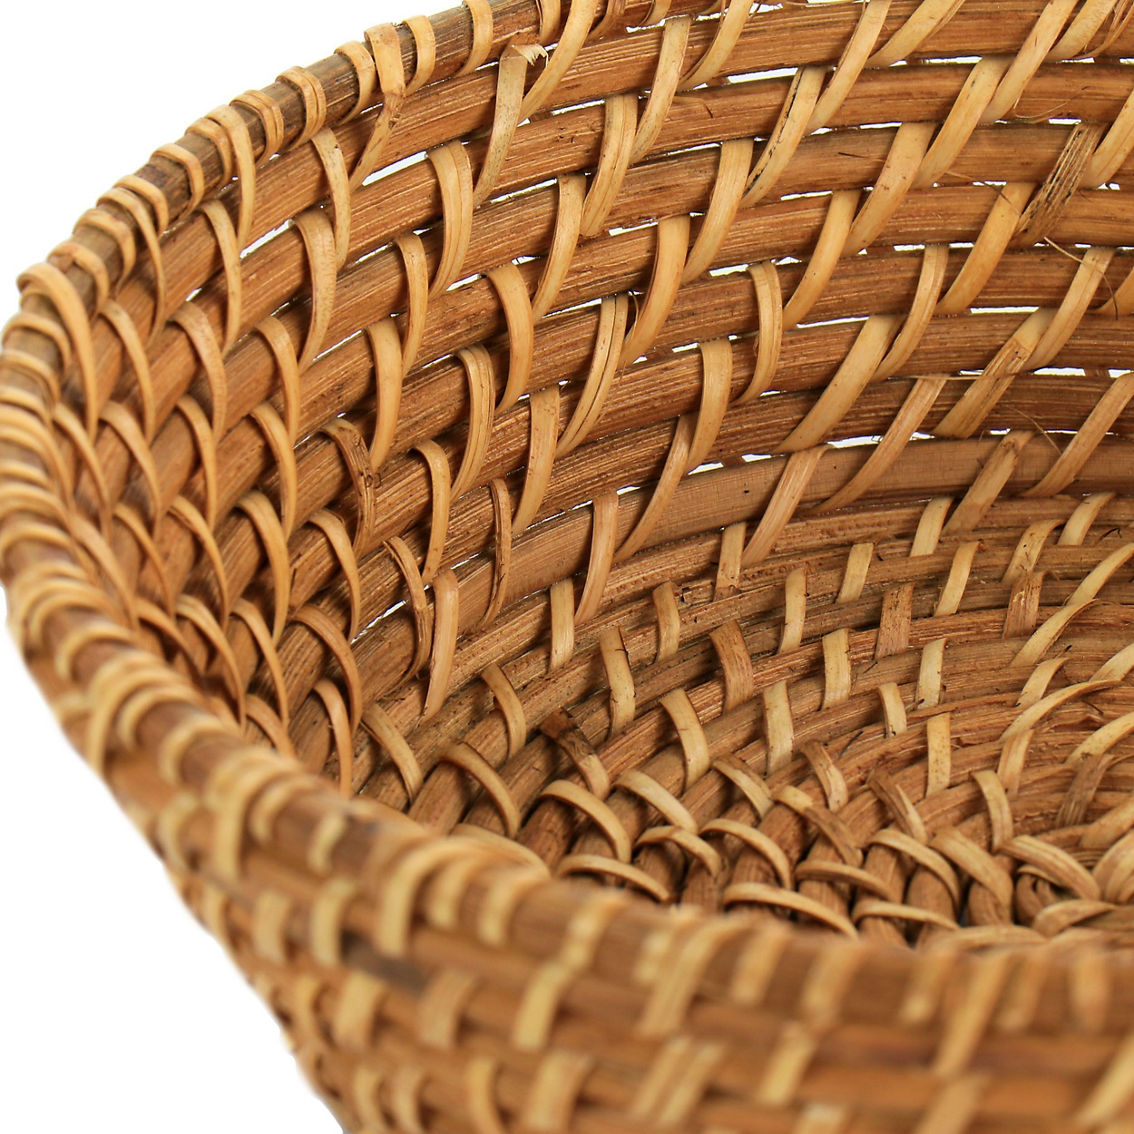 Martha Stewart 9 Inch Rattan Woven Loaf Basket in Brown - Image 5 of 5